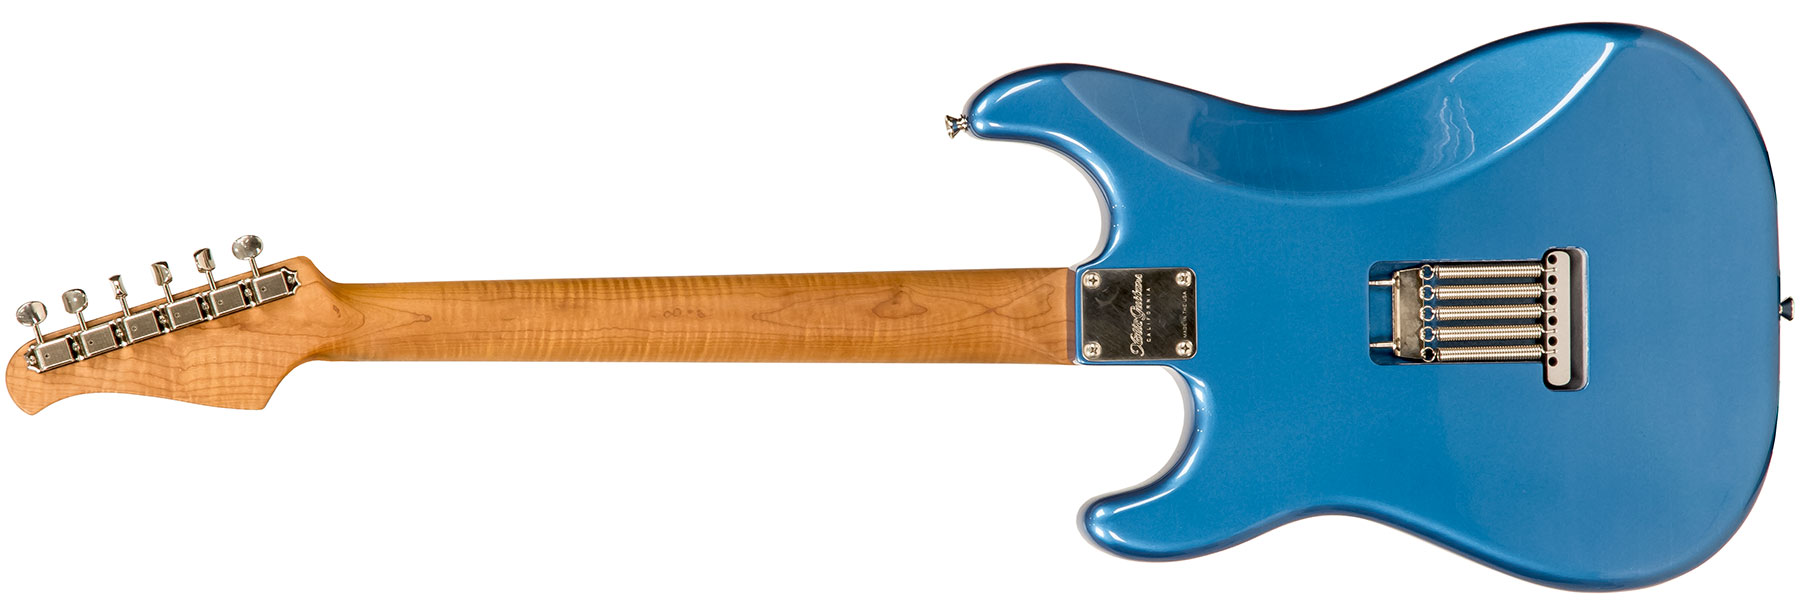 Xotic Xscpro-2 California Class Hss Mn - Light Aging Lake Placid Blue - Str shape electric guitar - Variation 1